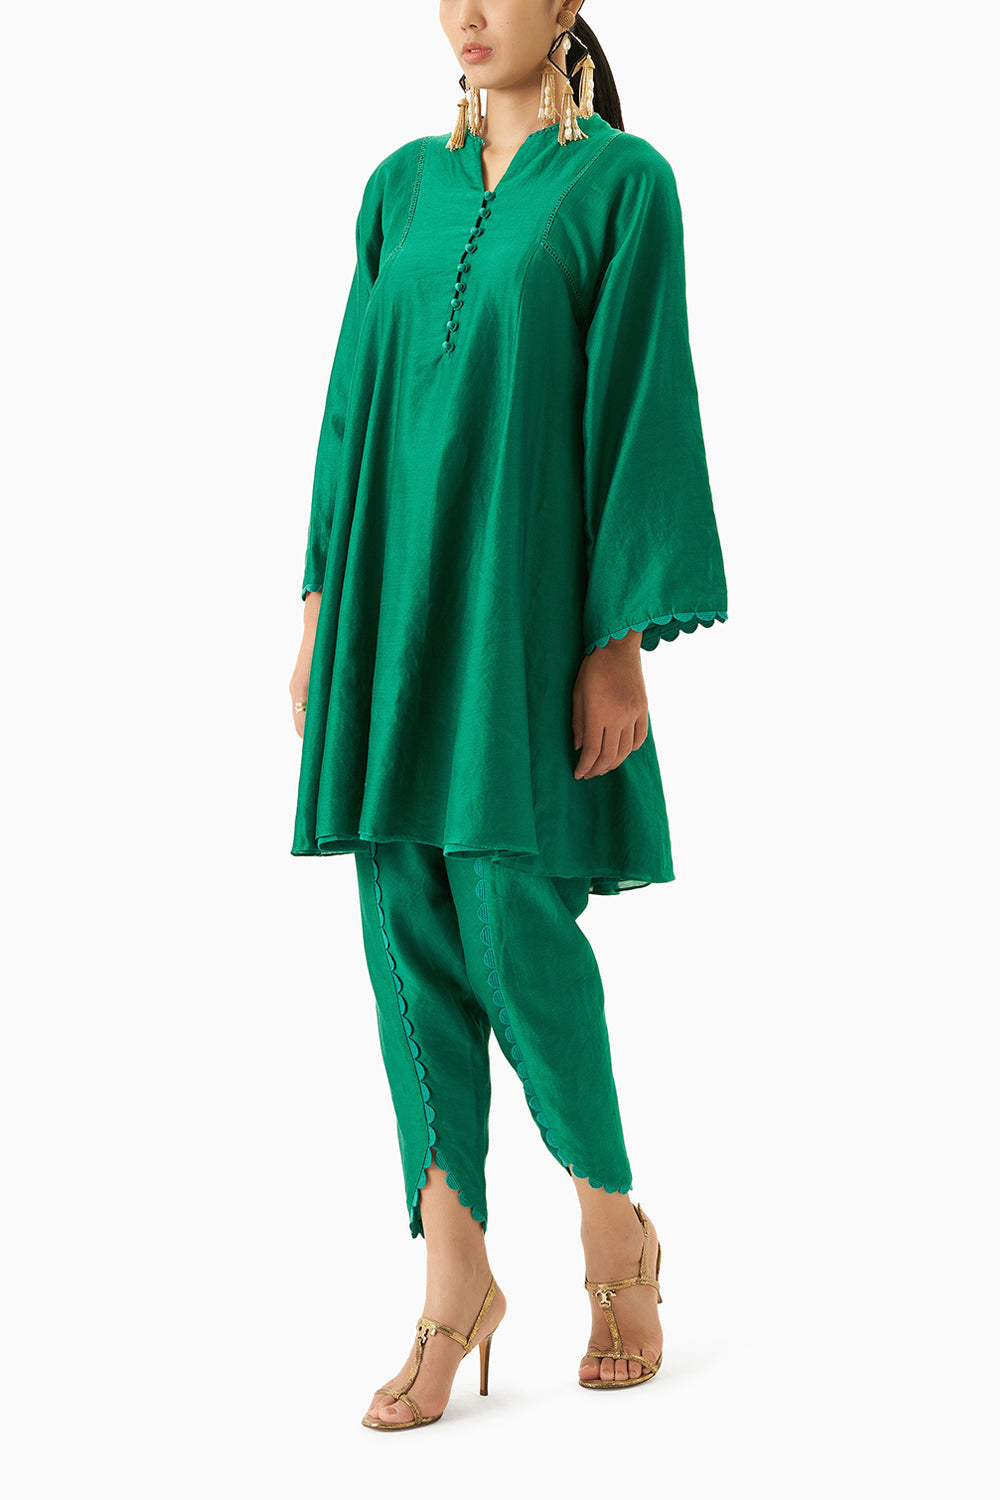 Tulip pants with kurti || Salwar kameez || Fashion with Shine - YouTube